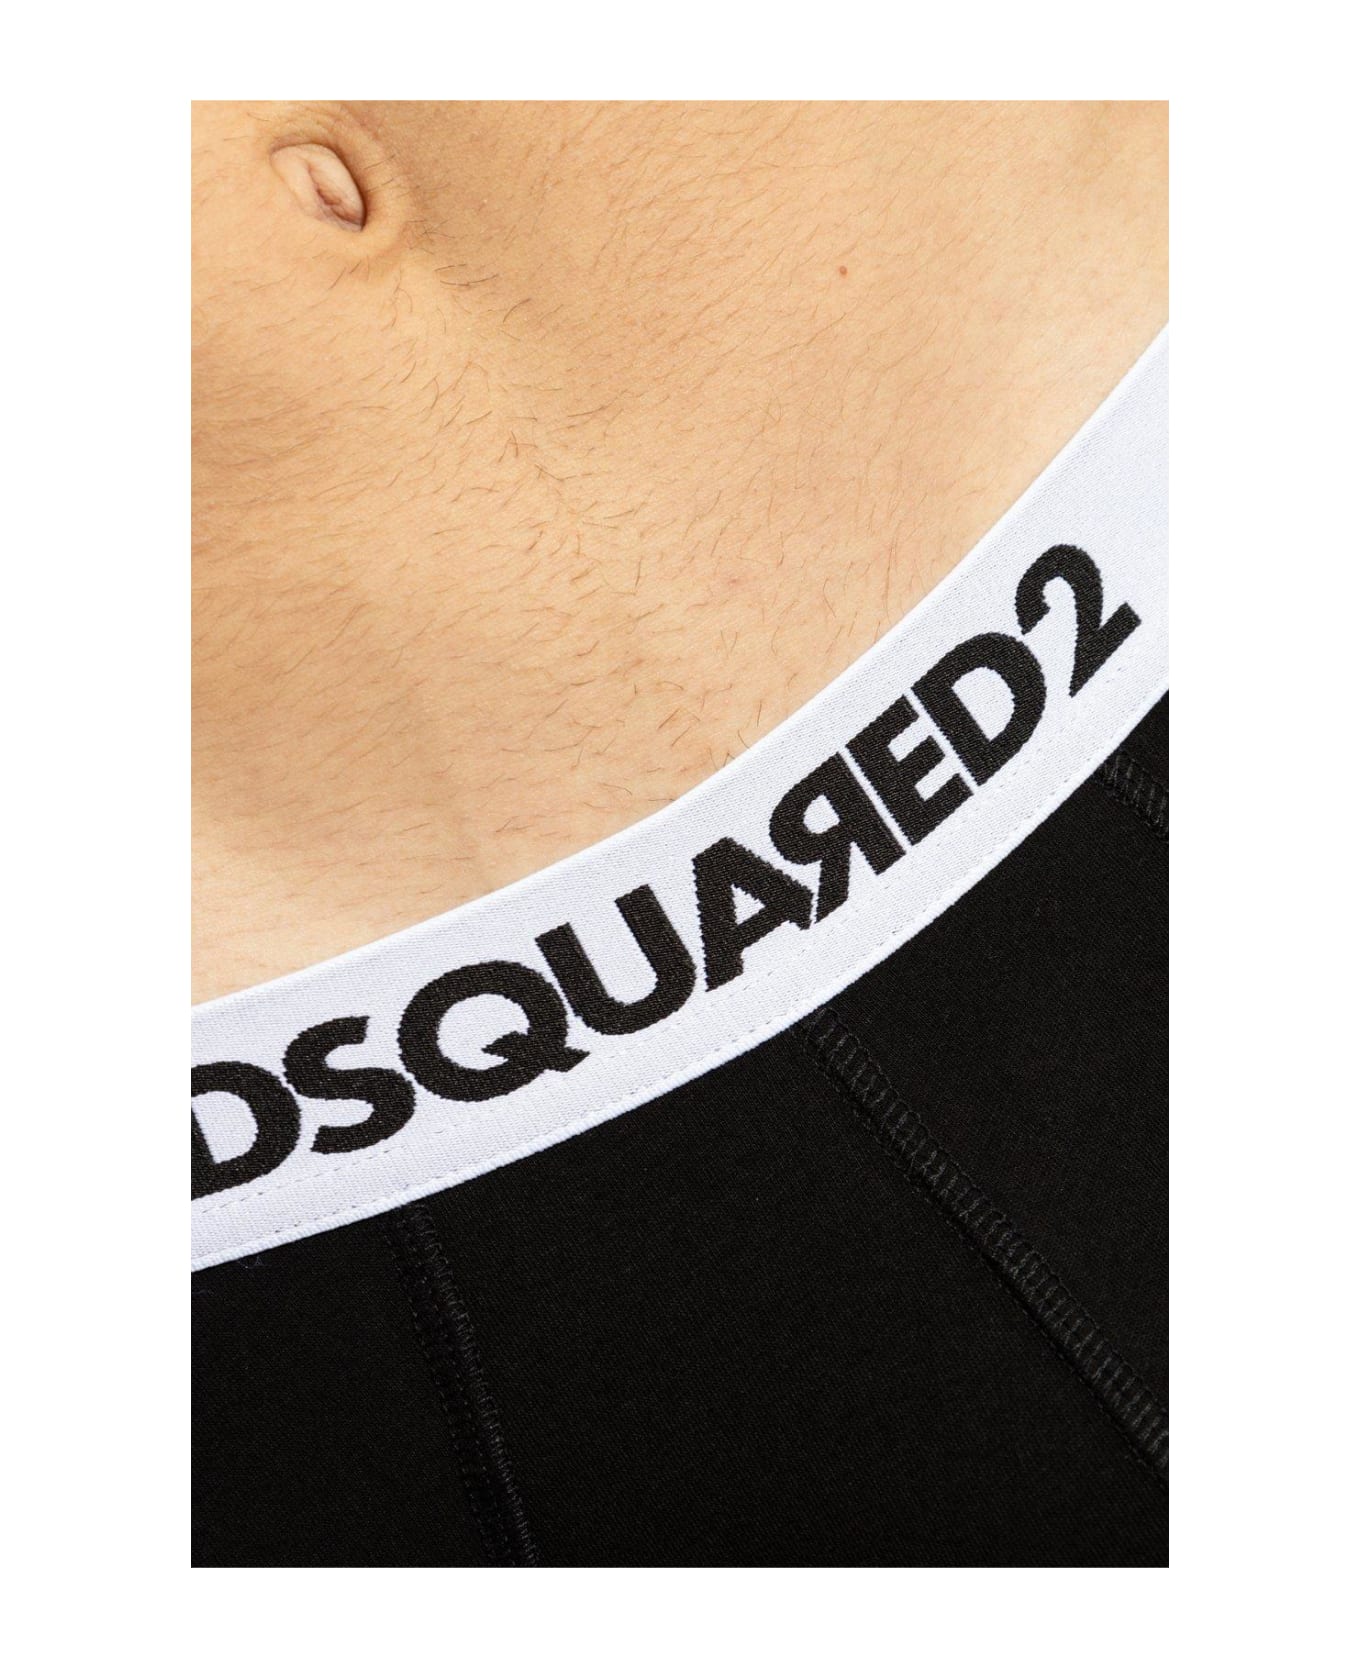 Dsquared2 2 Pack Logo Waistband Briefs - Black/white